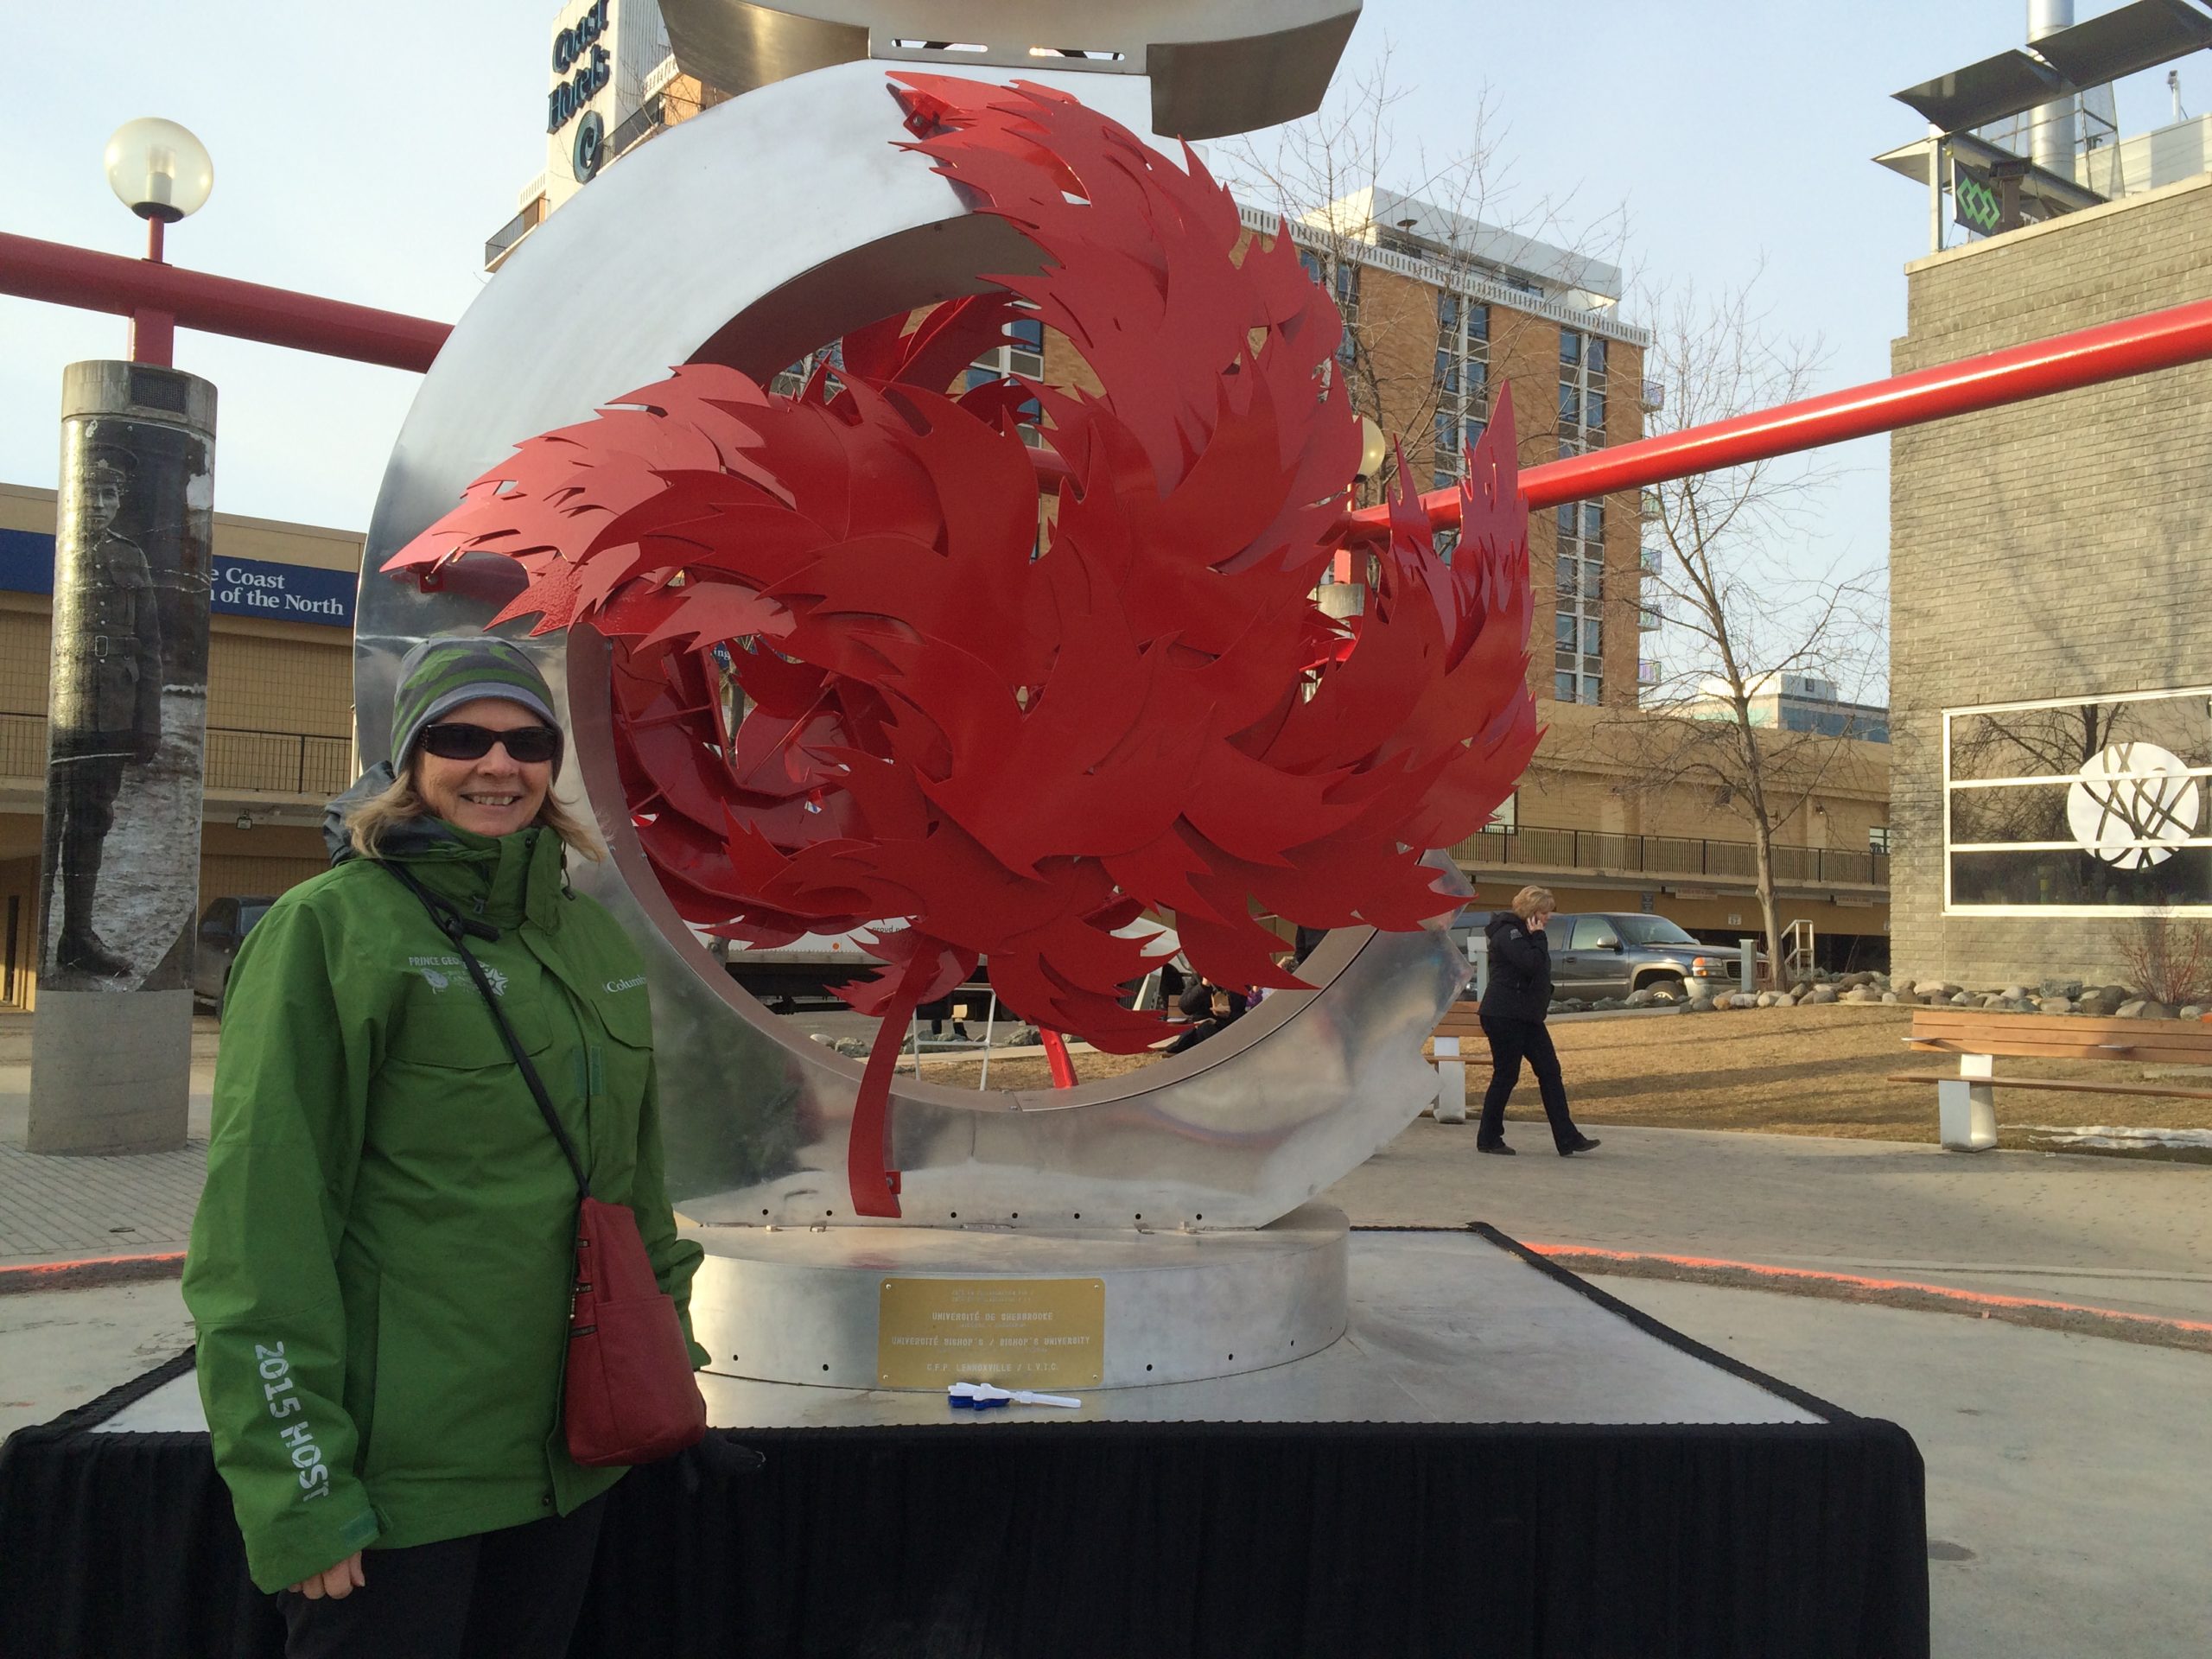 Jennifer saunders at Canada winter games 2015